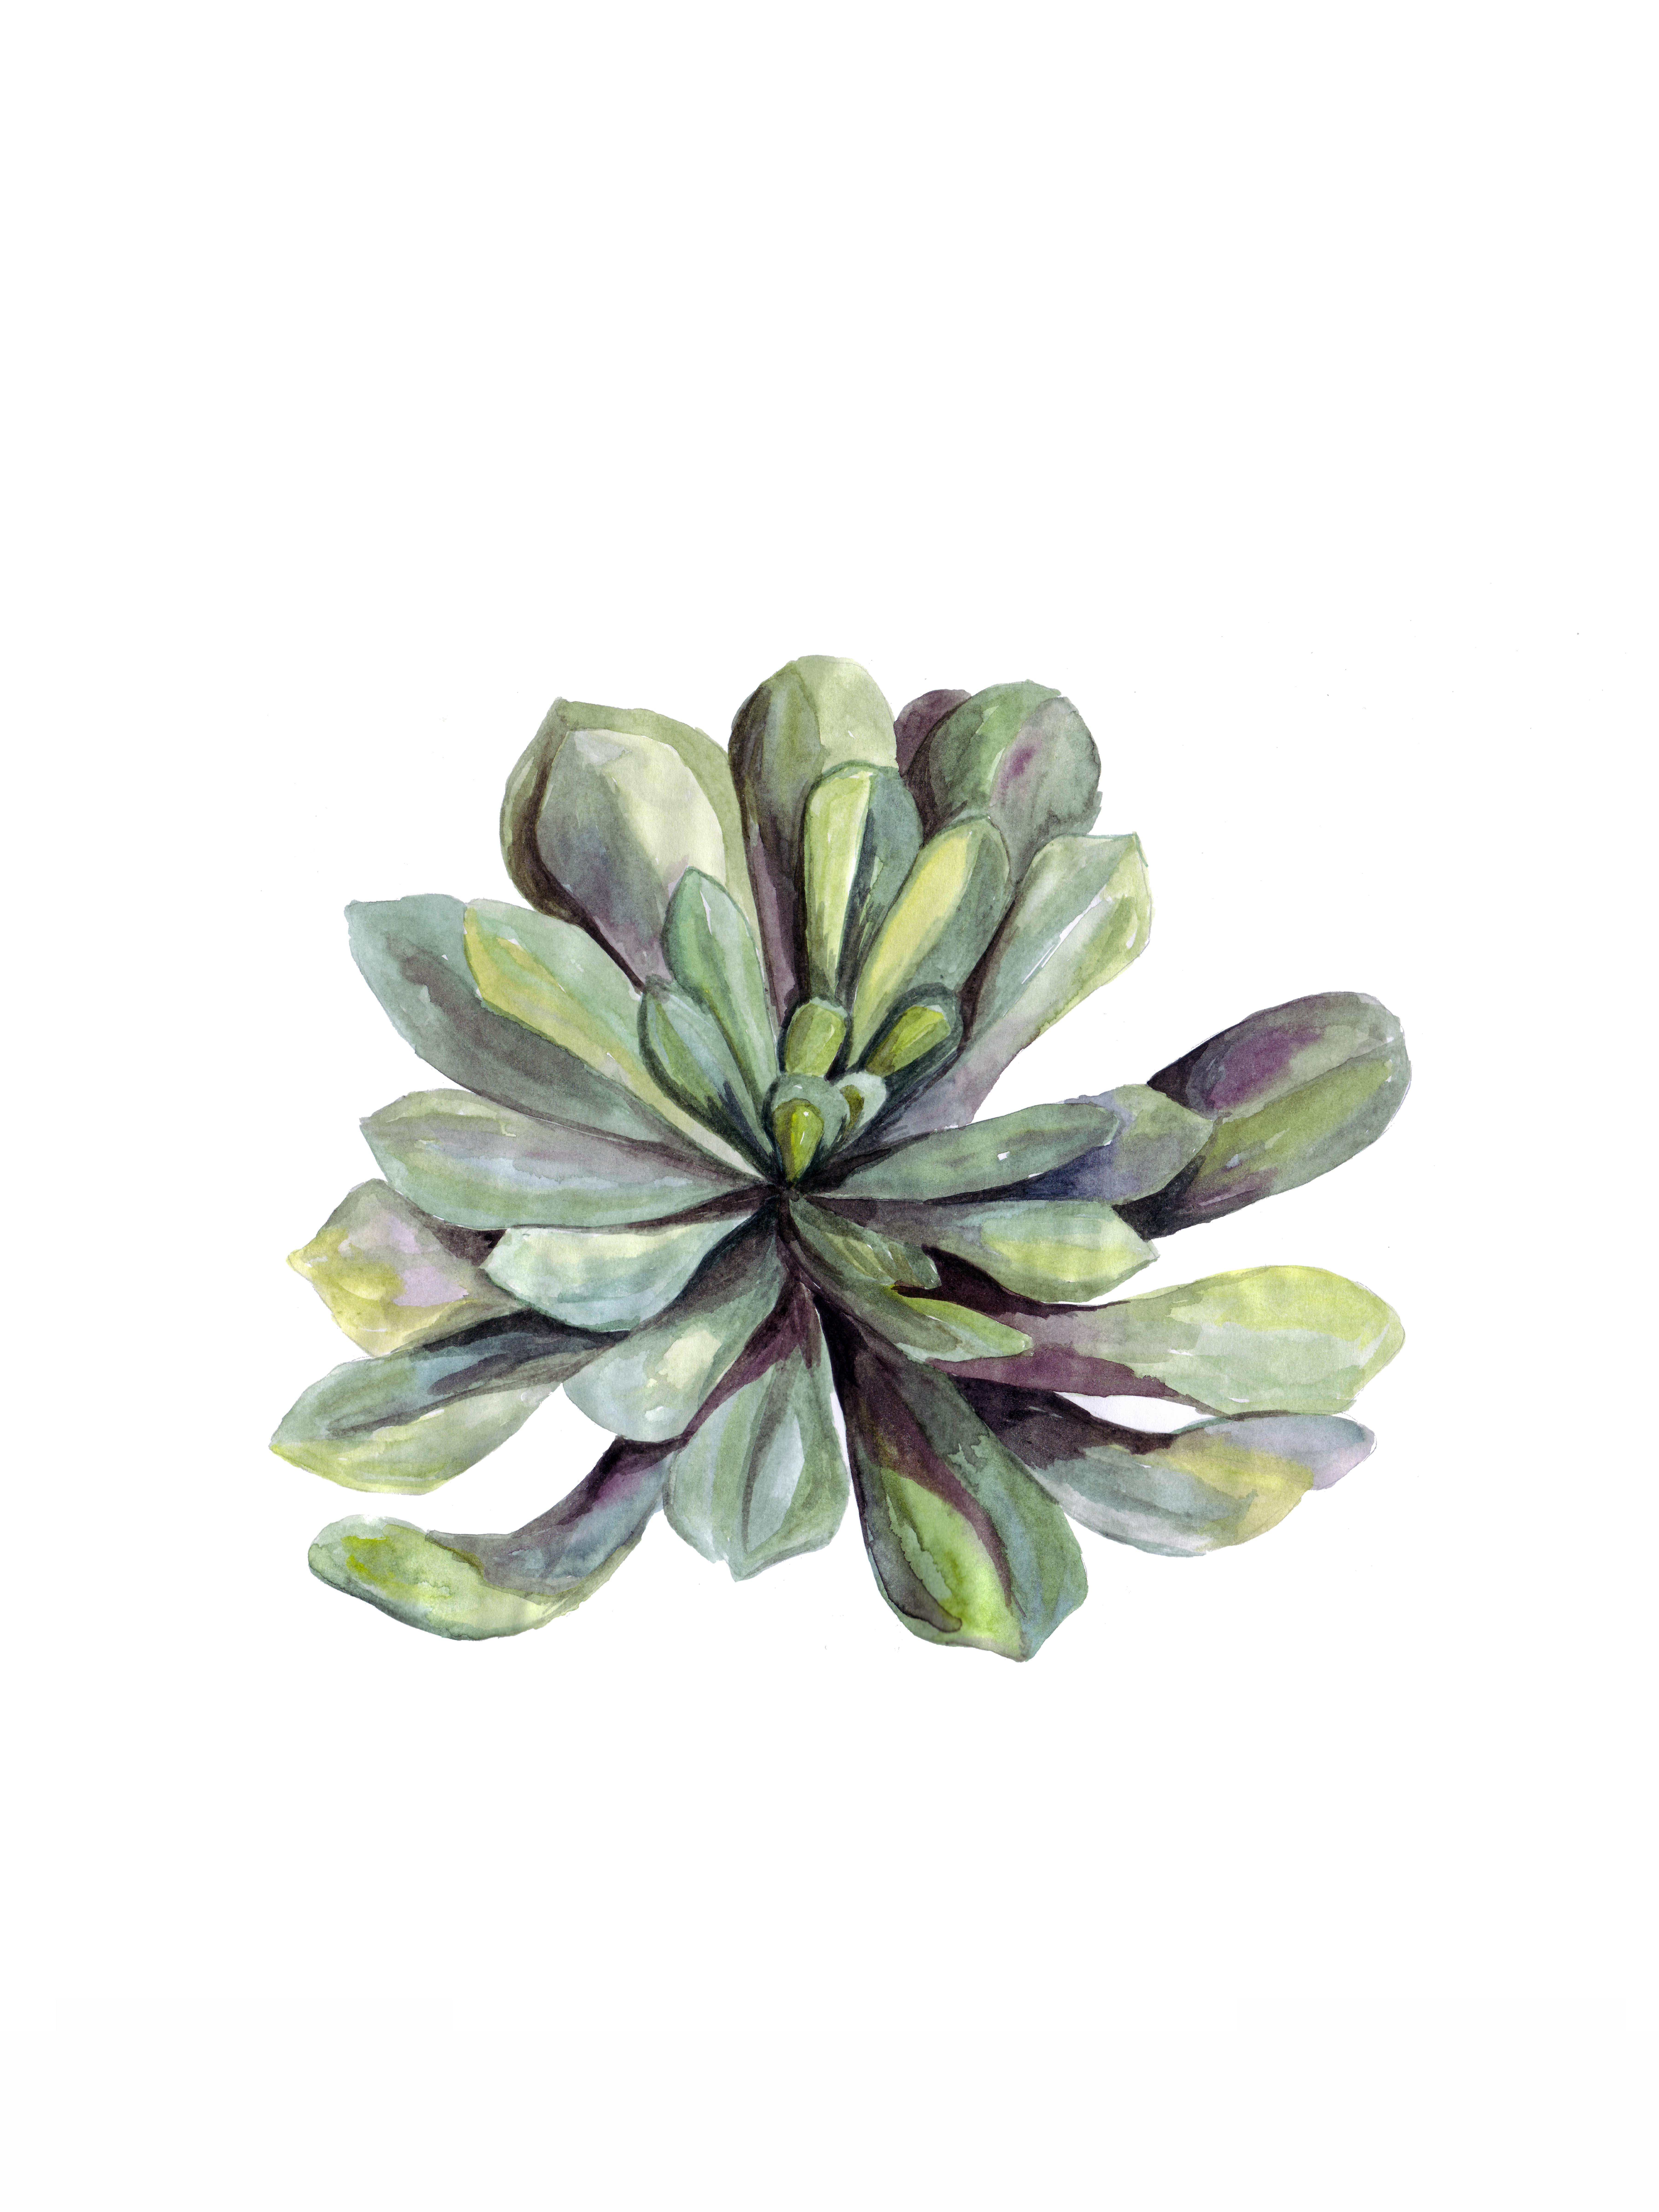 797-botanical-illustration---succulent.jpg